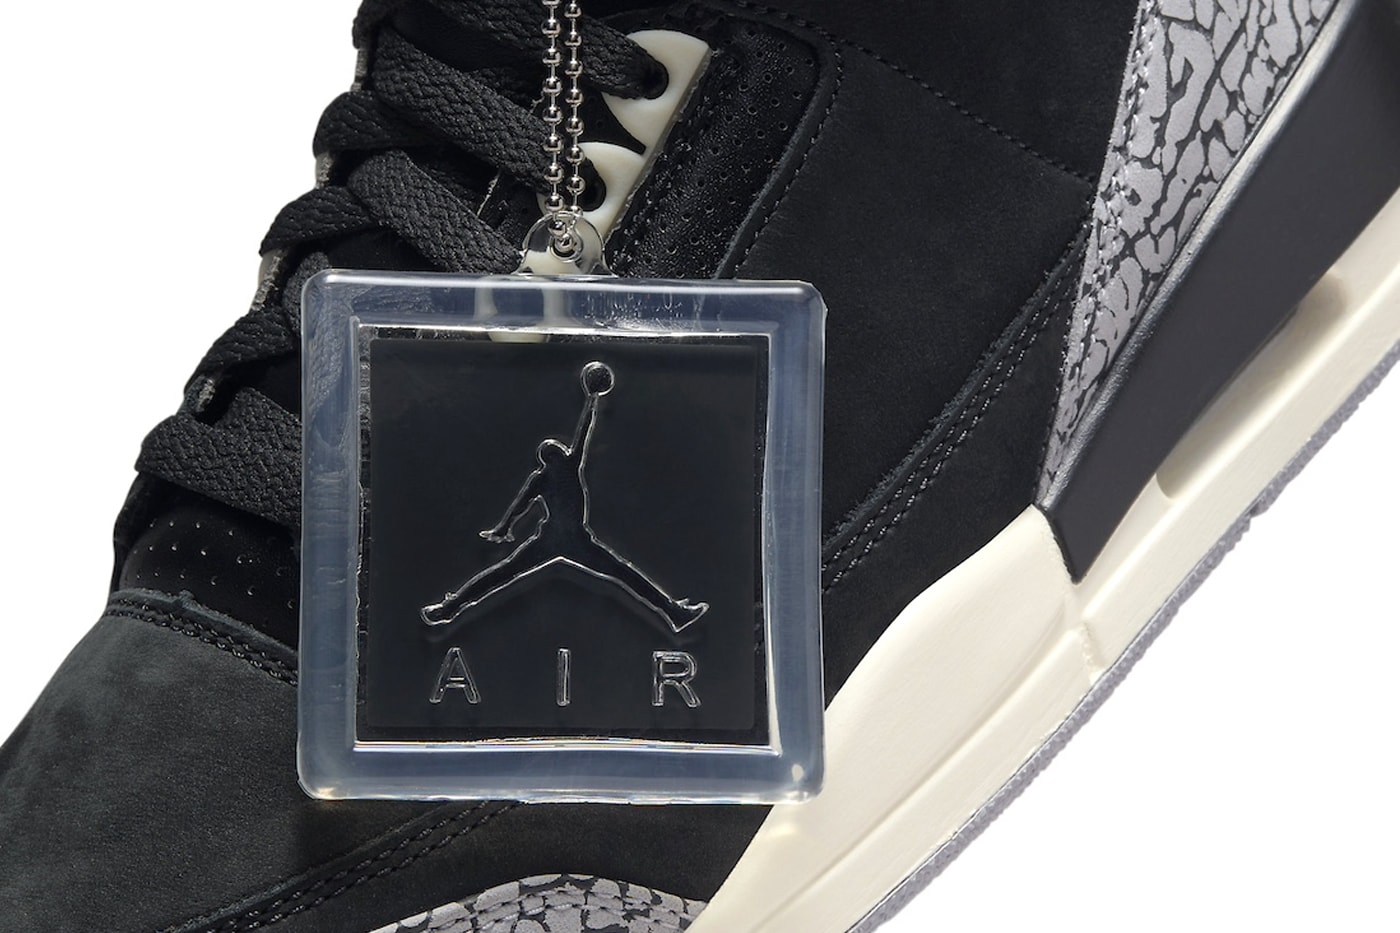 Air Jordan 3 "Off Noir" Is Slated to Release This Month CK9246-001 Off Noir/Black-Coconut Milk-Cement Grey michael jordan brand swoosh jumpman nike